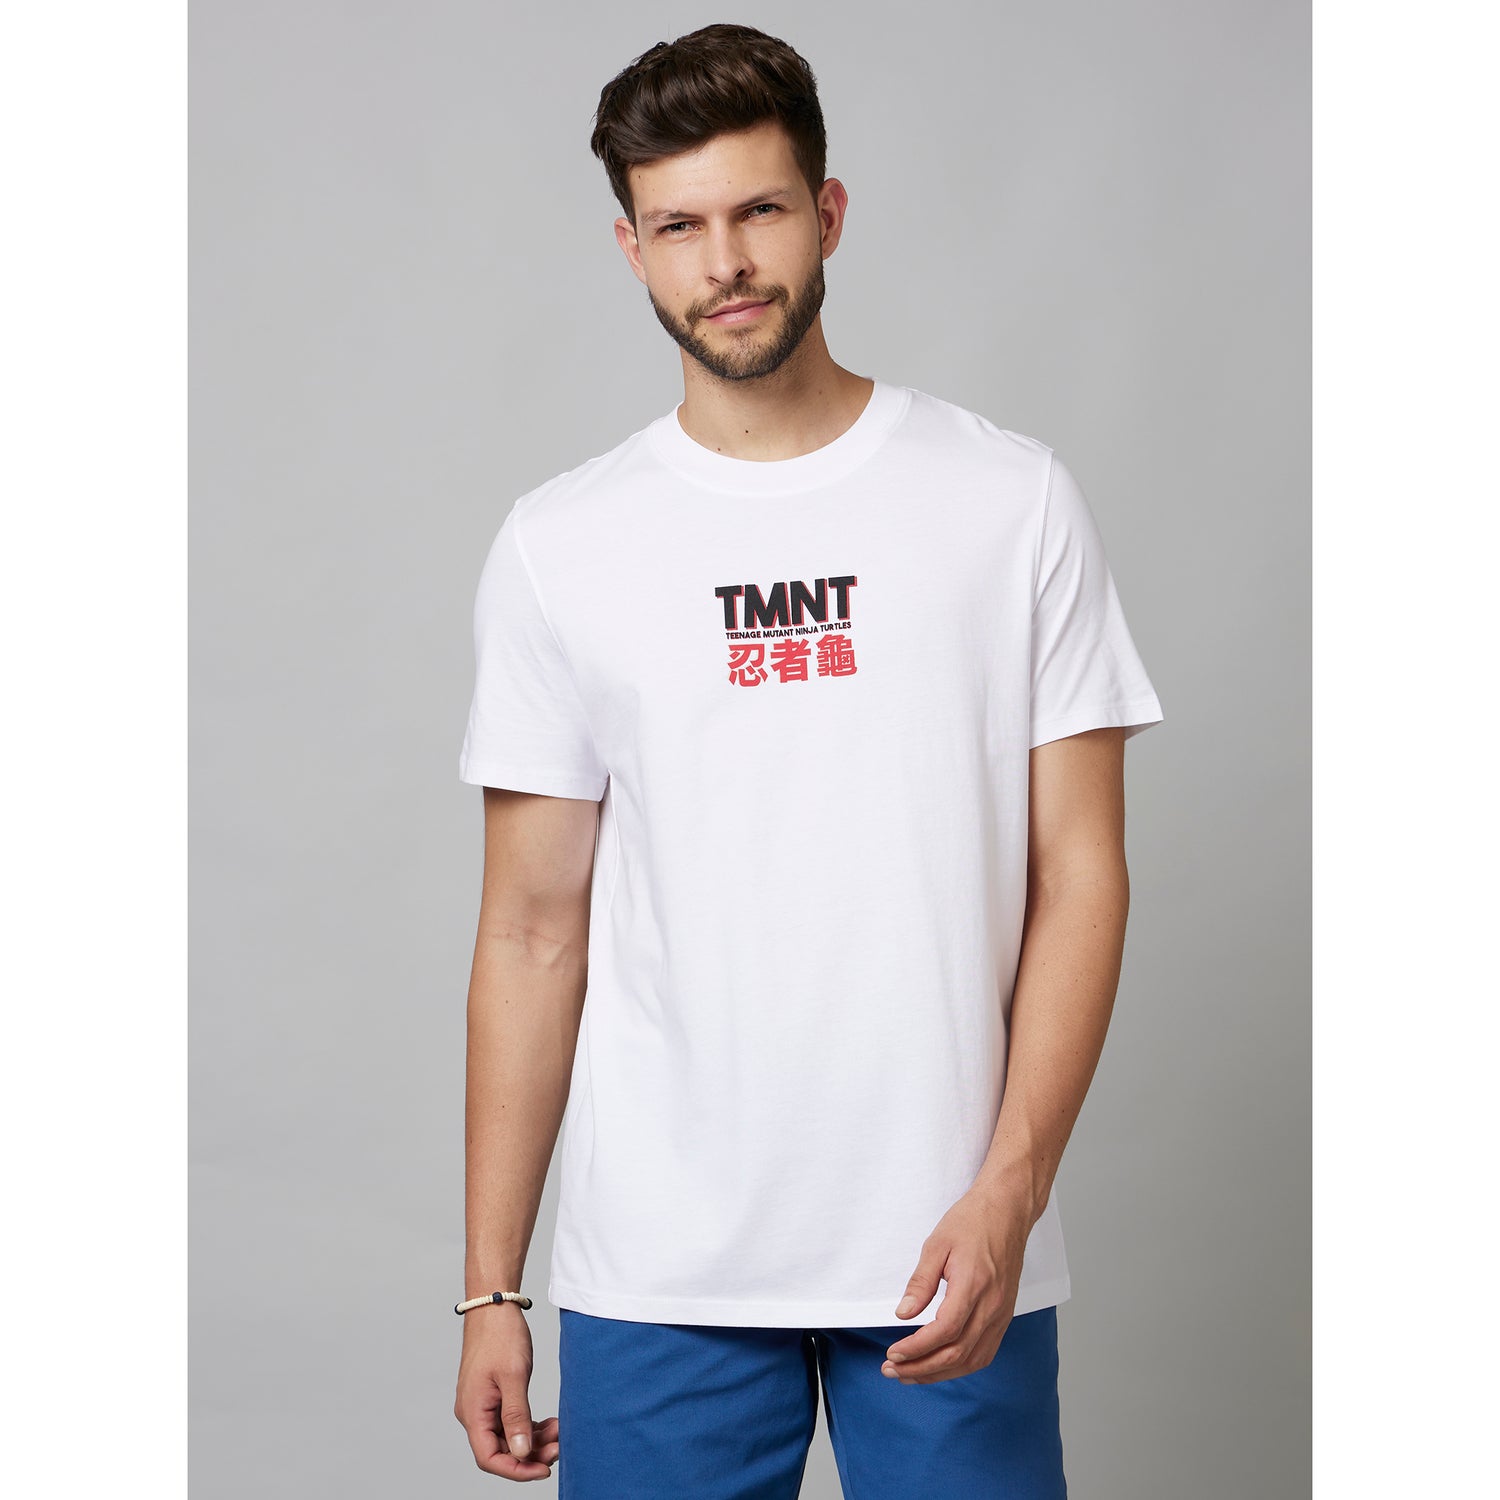 Teenage Mutant Ninja Turtle - Letter White Short Sleeve Cotton T-Shirts (LDETURTLE)